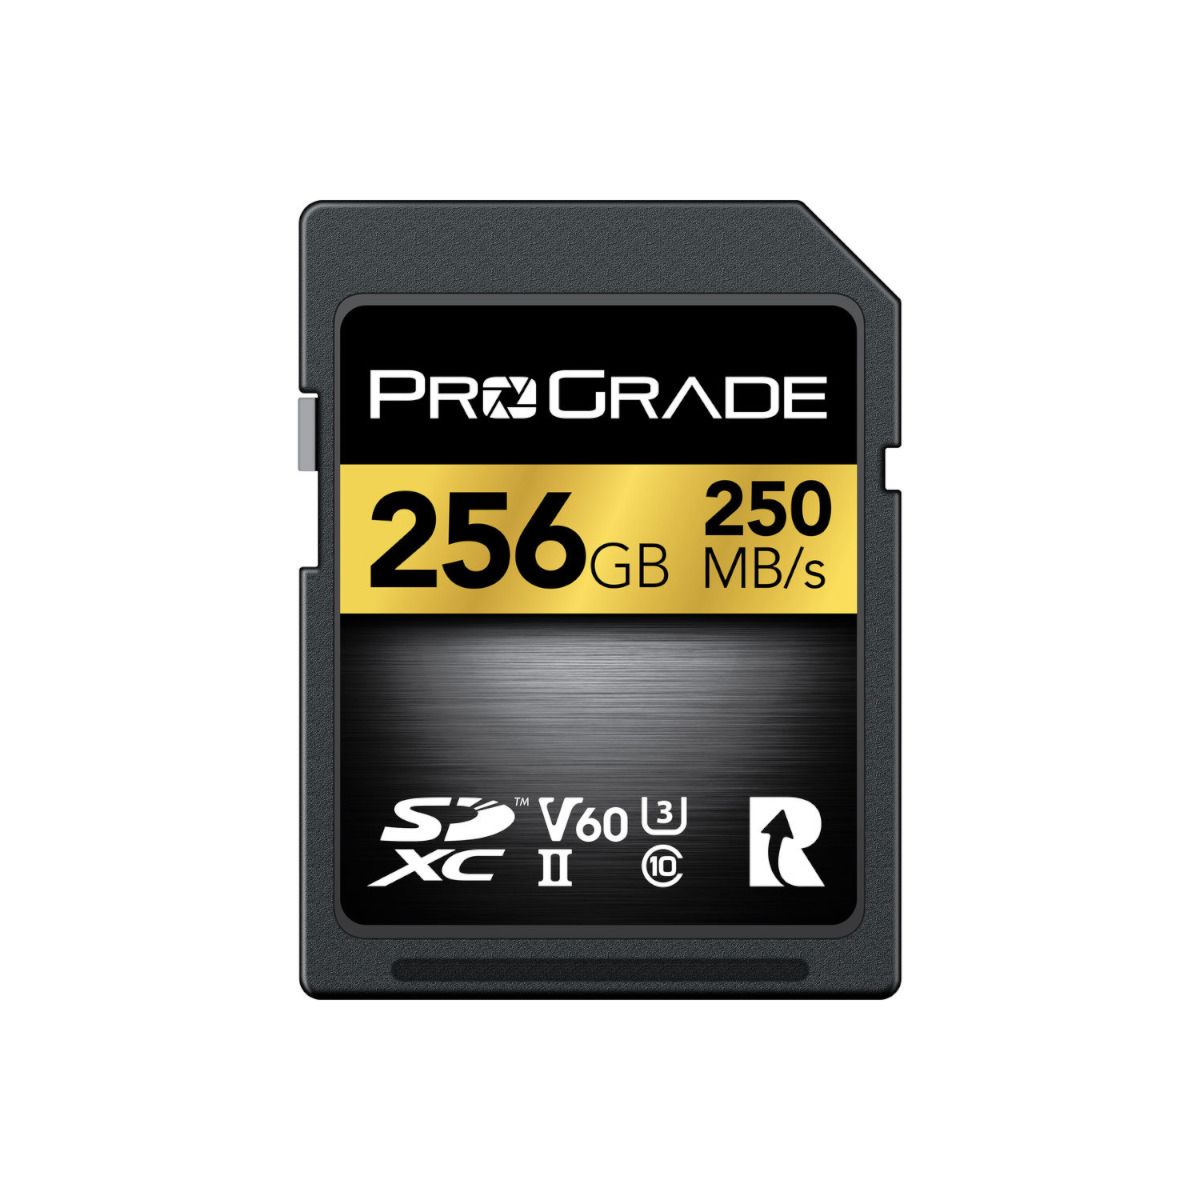 प्रोग्रेड डिजिटल 256जीबी एसडीएक्ससी यूएचएस II वी60 मेमोरी कार्ड गोल्ड 250 एमबी/एस